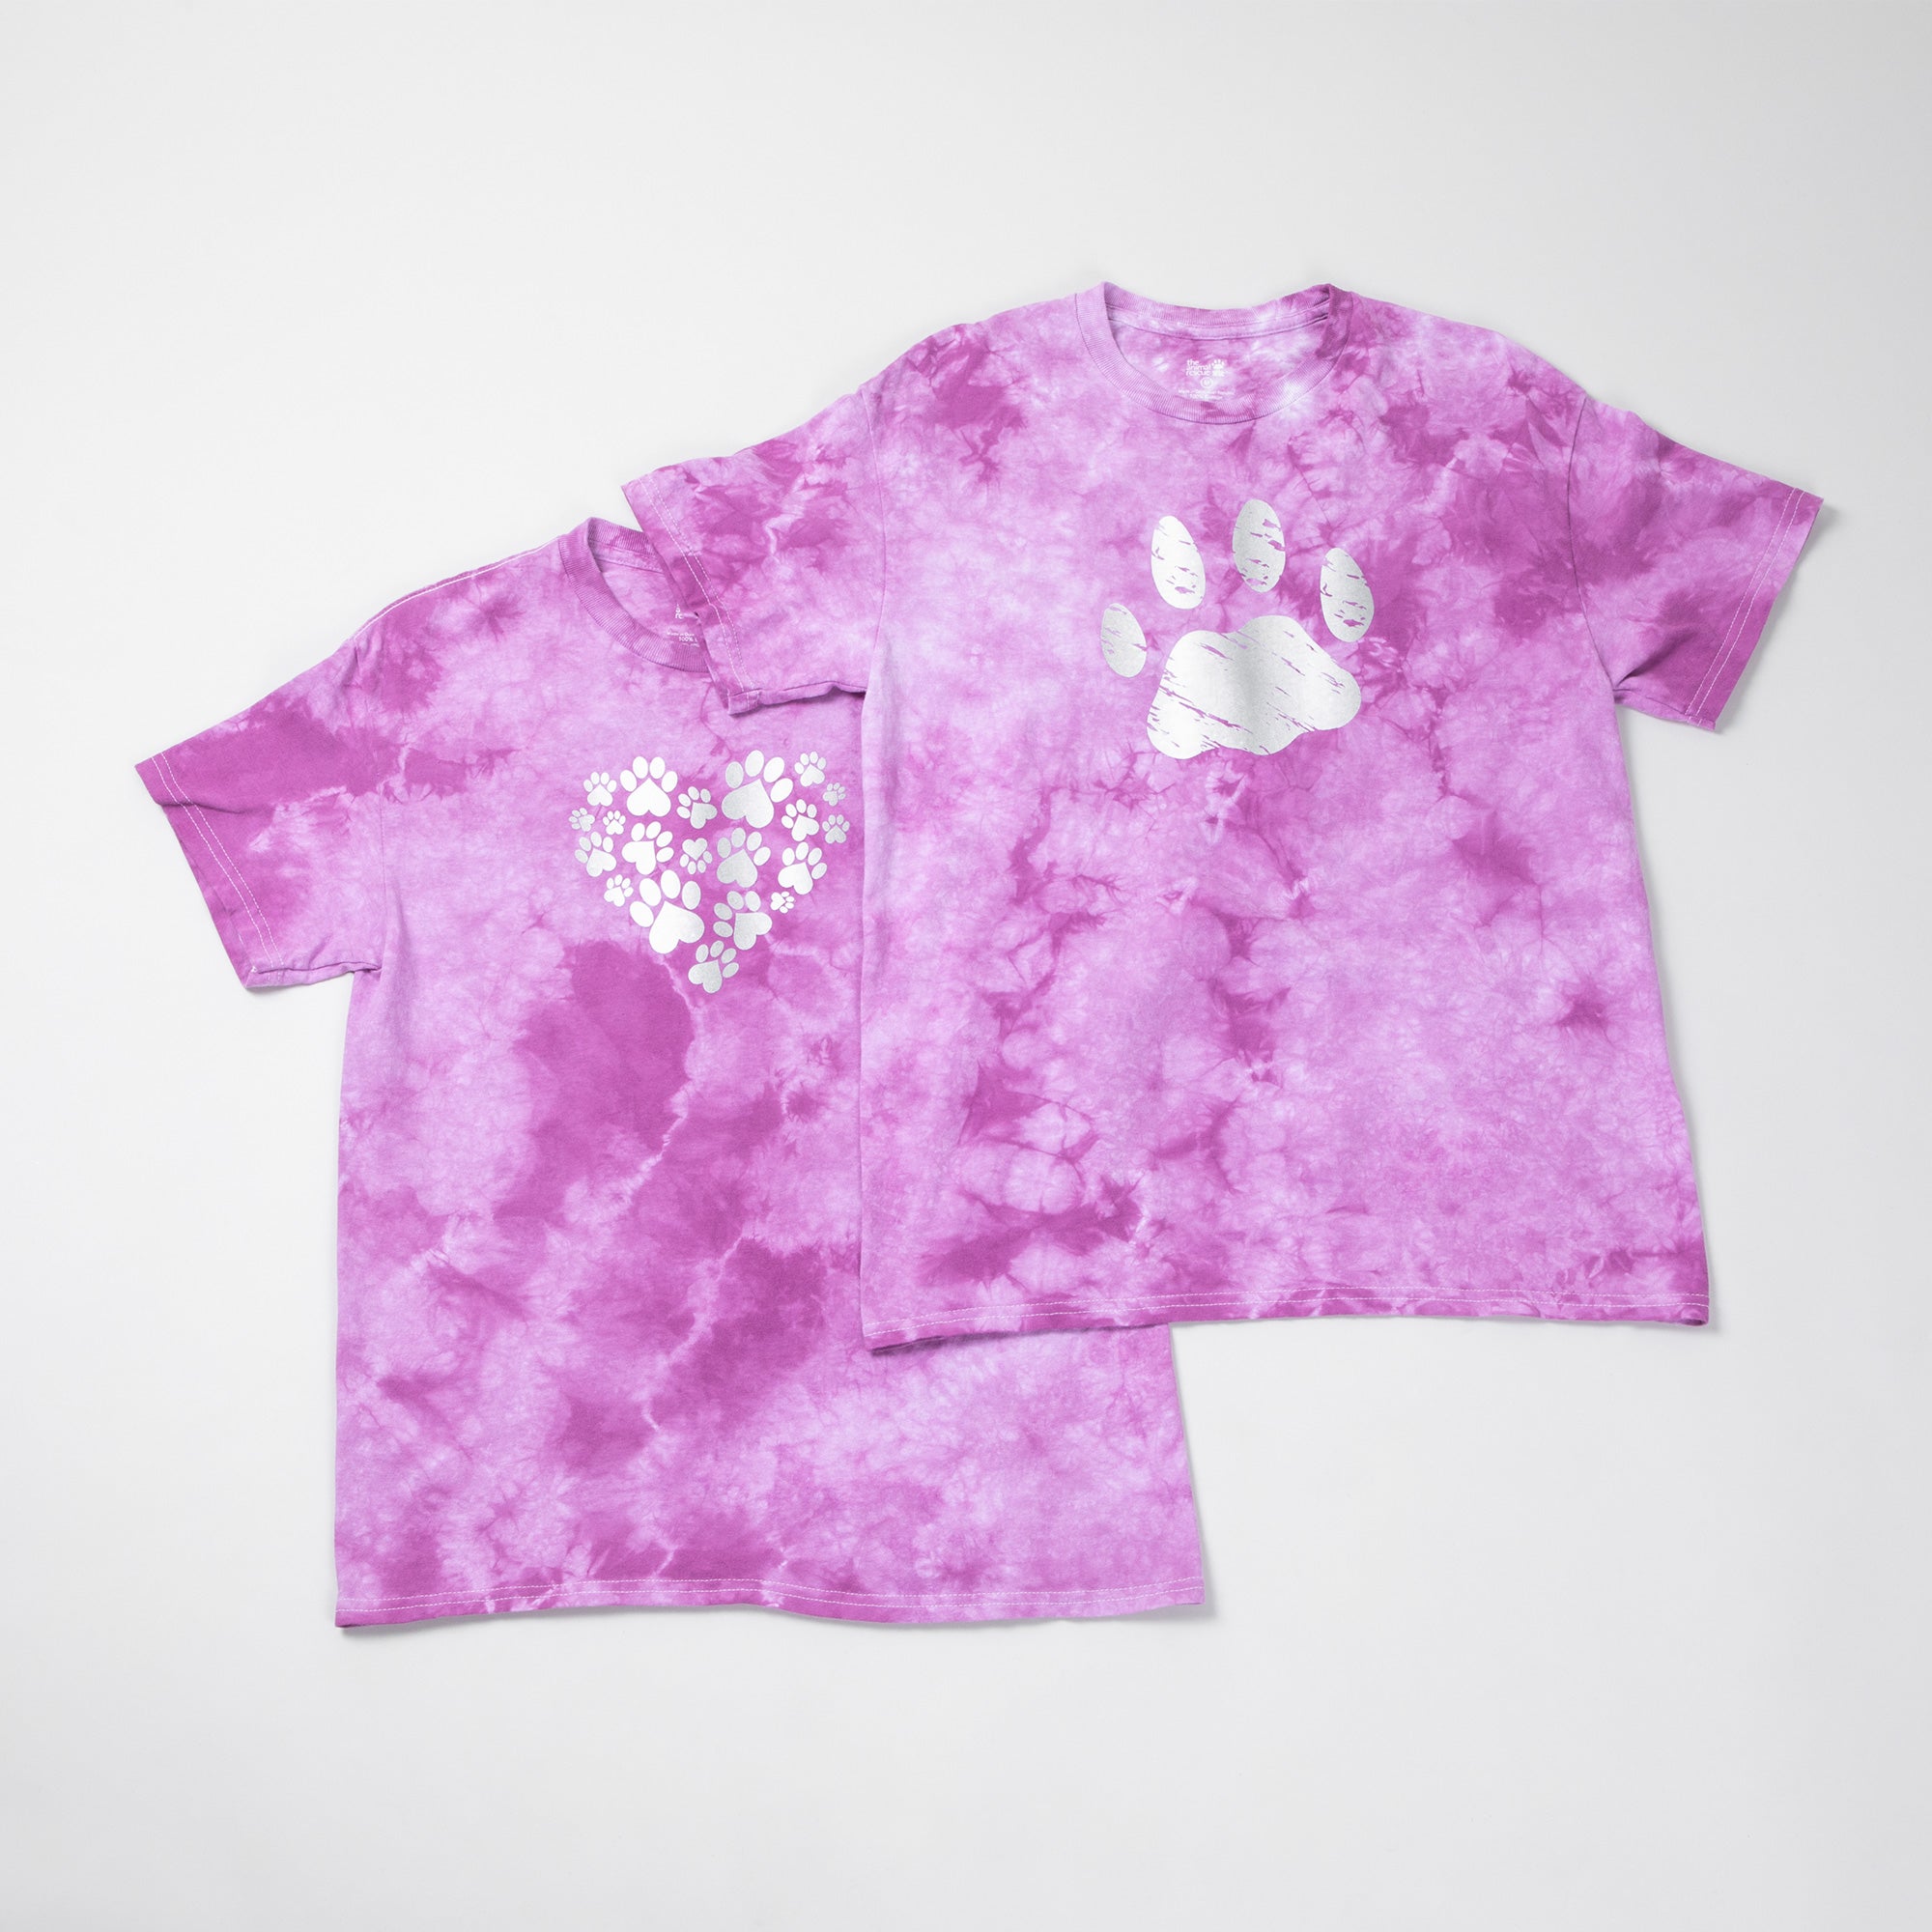 Paw Print Boysenberry Tie-Dye T-Shirt - Collegiate Paw - M